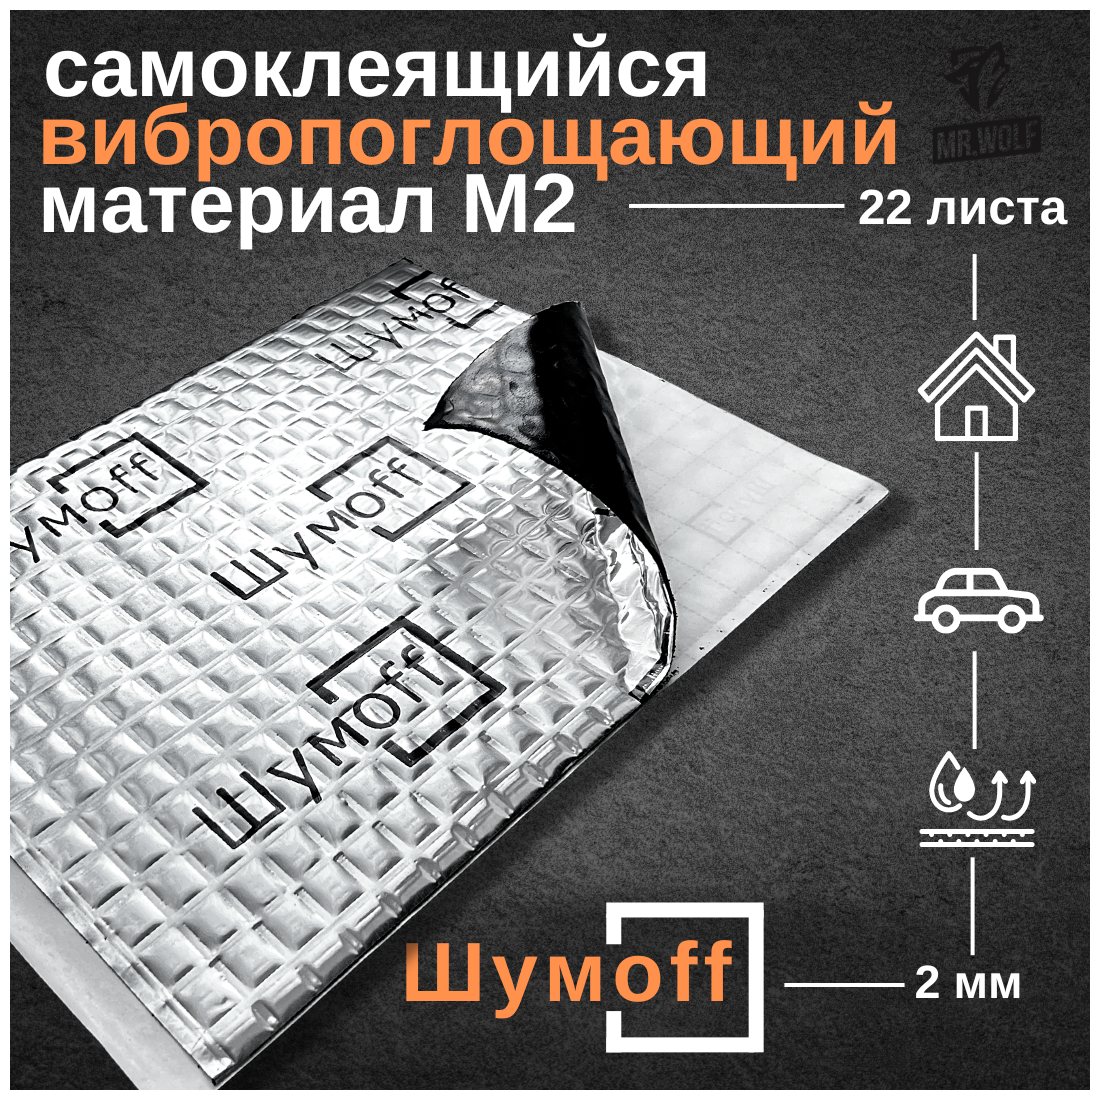 Шумоизоляция для автомобиля, виброизоляция шумофф М2 1 лист (0.1 кв. м)